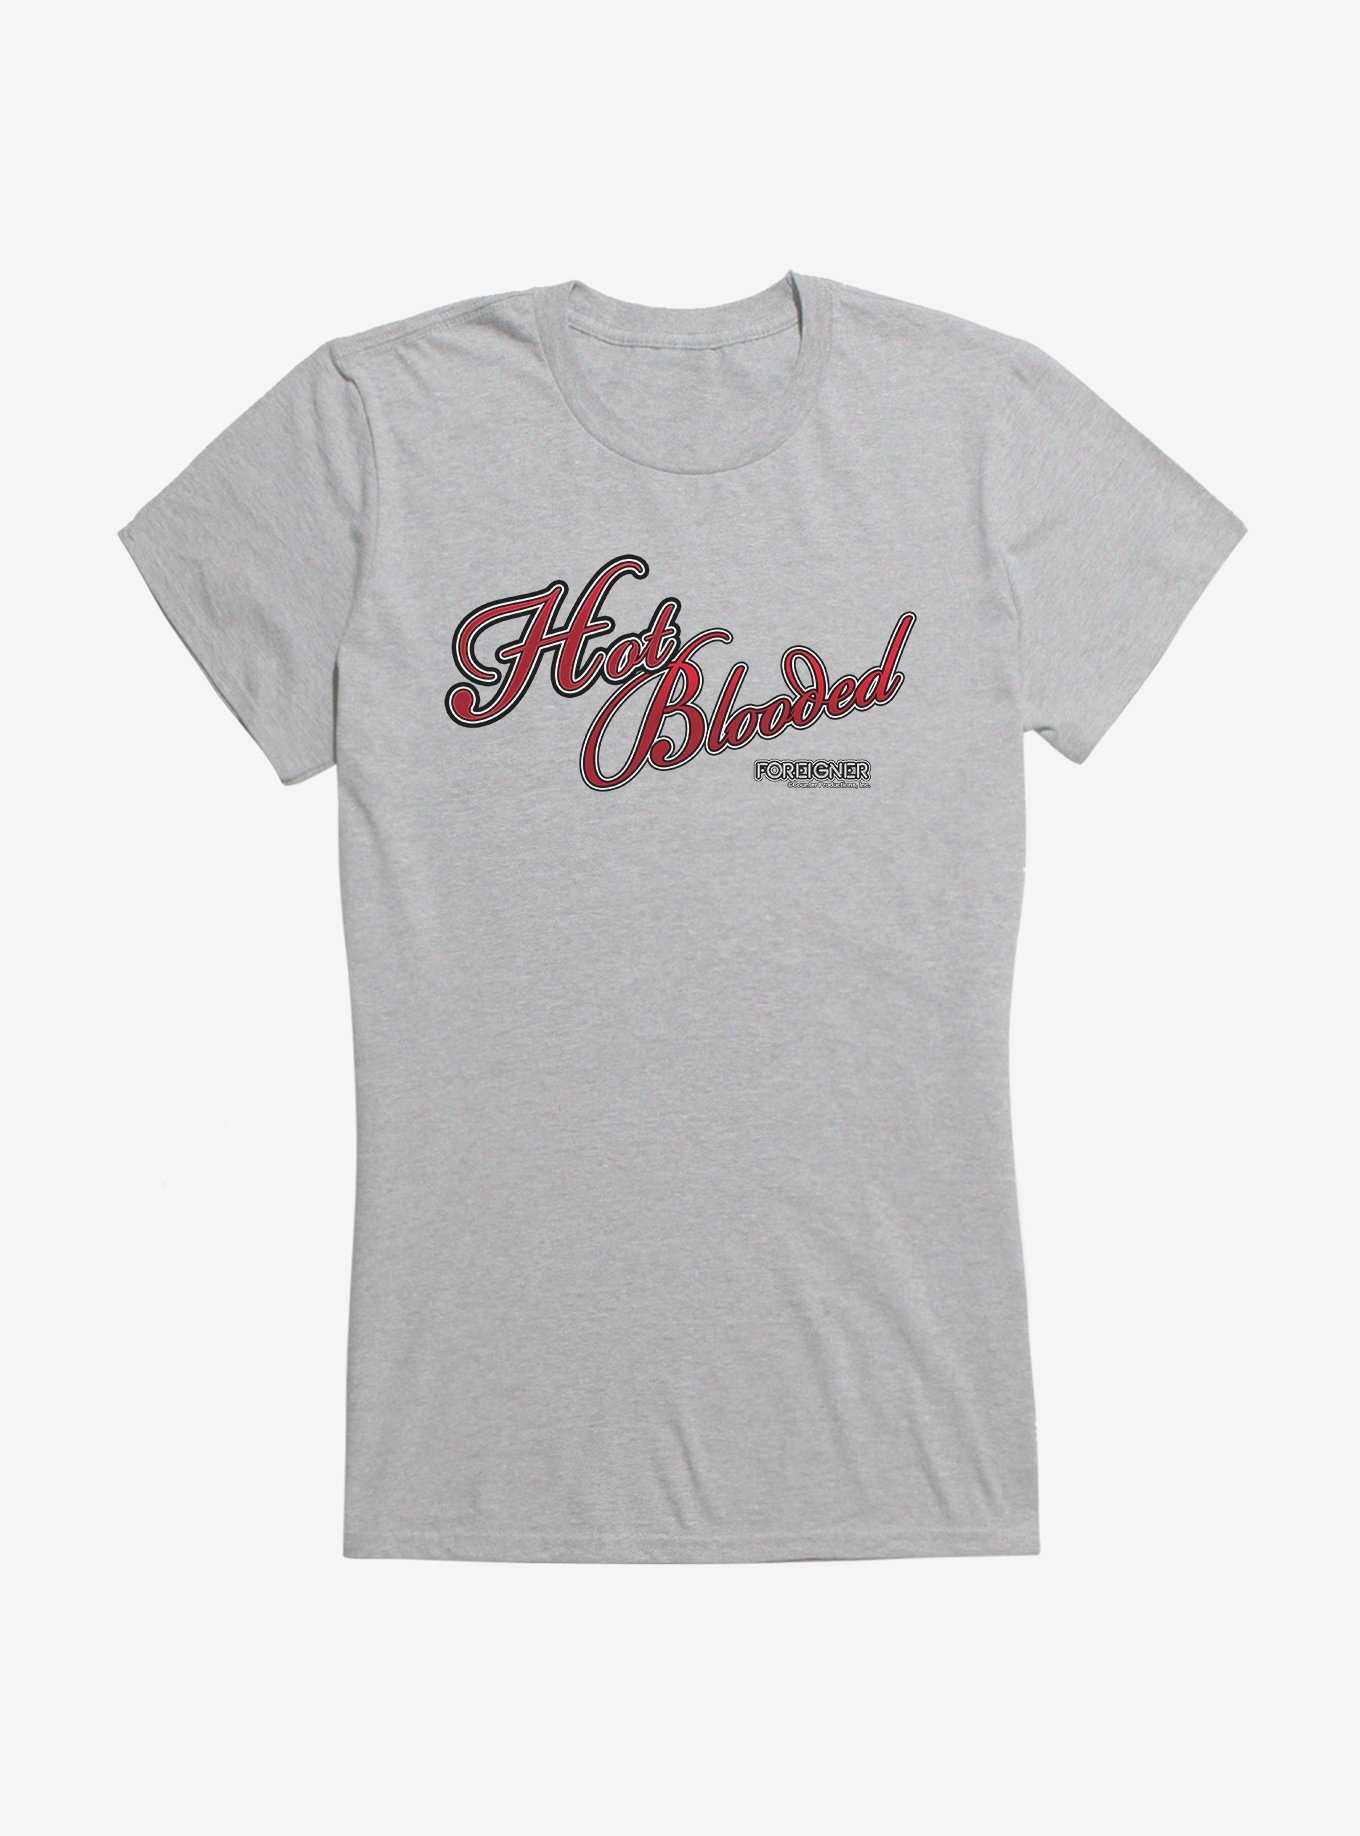 Foreigner Hot Blooded Girls T-Shirt, , hi-res